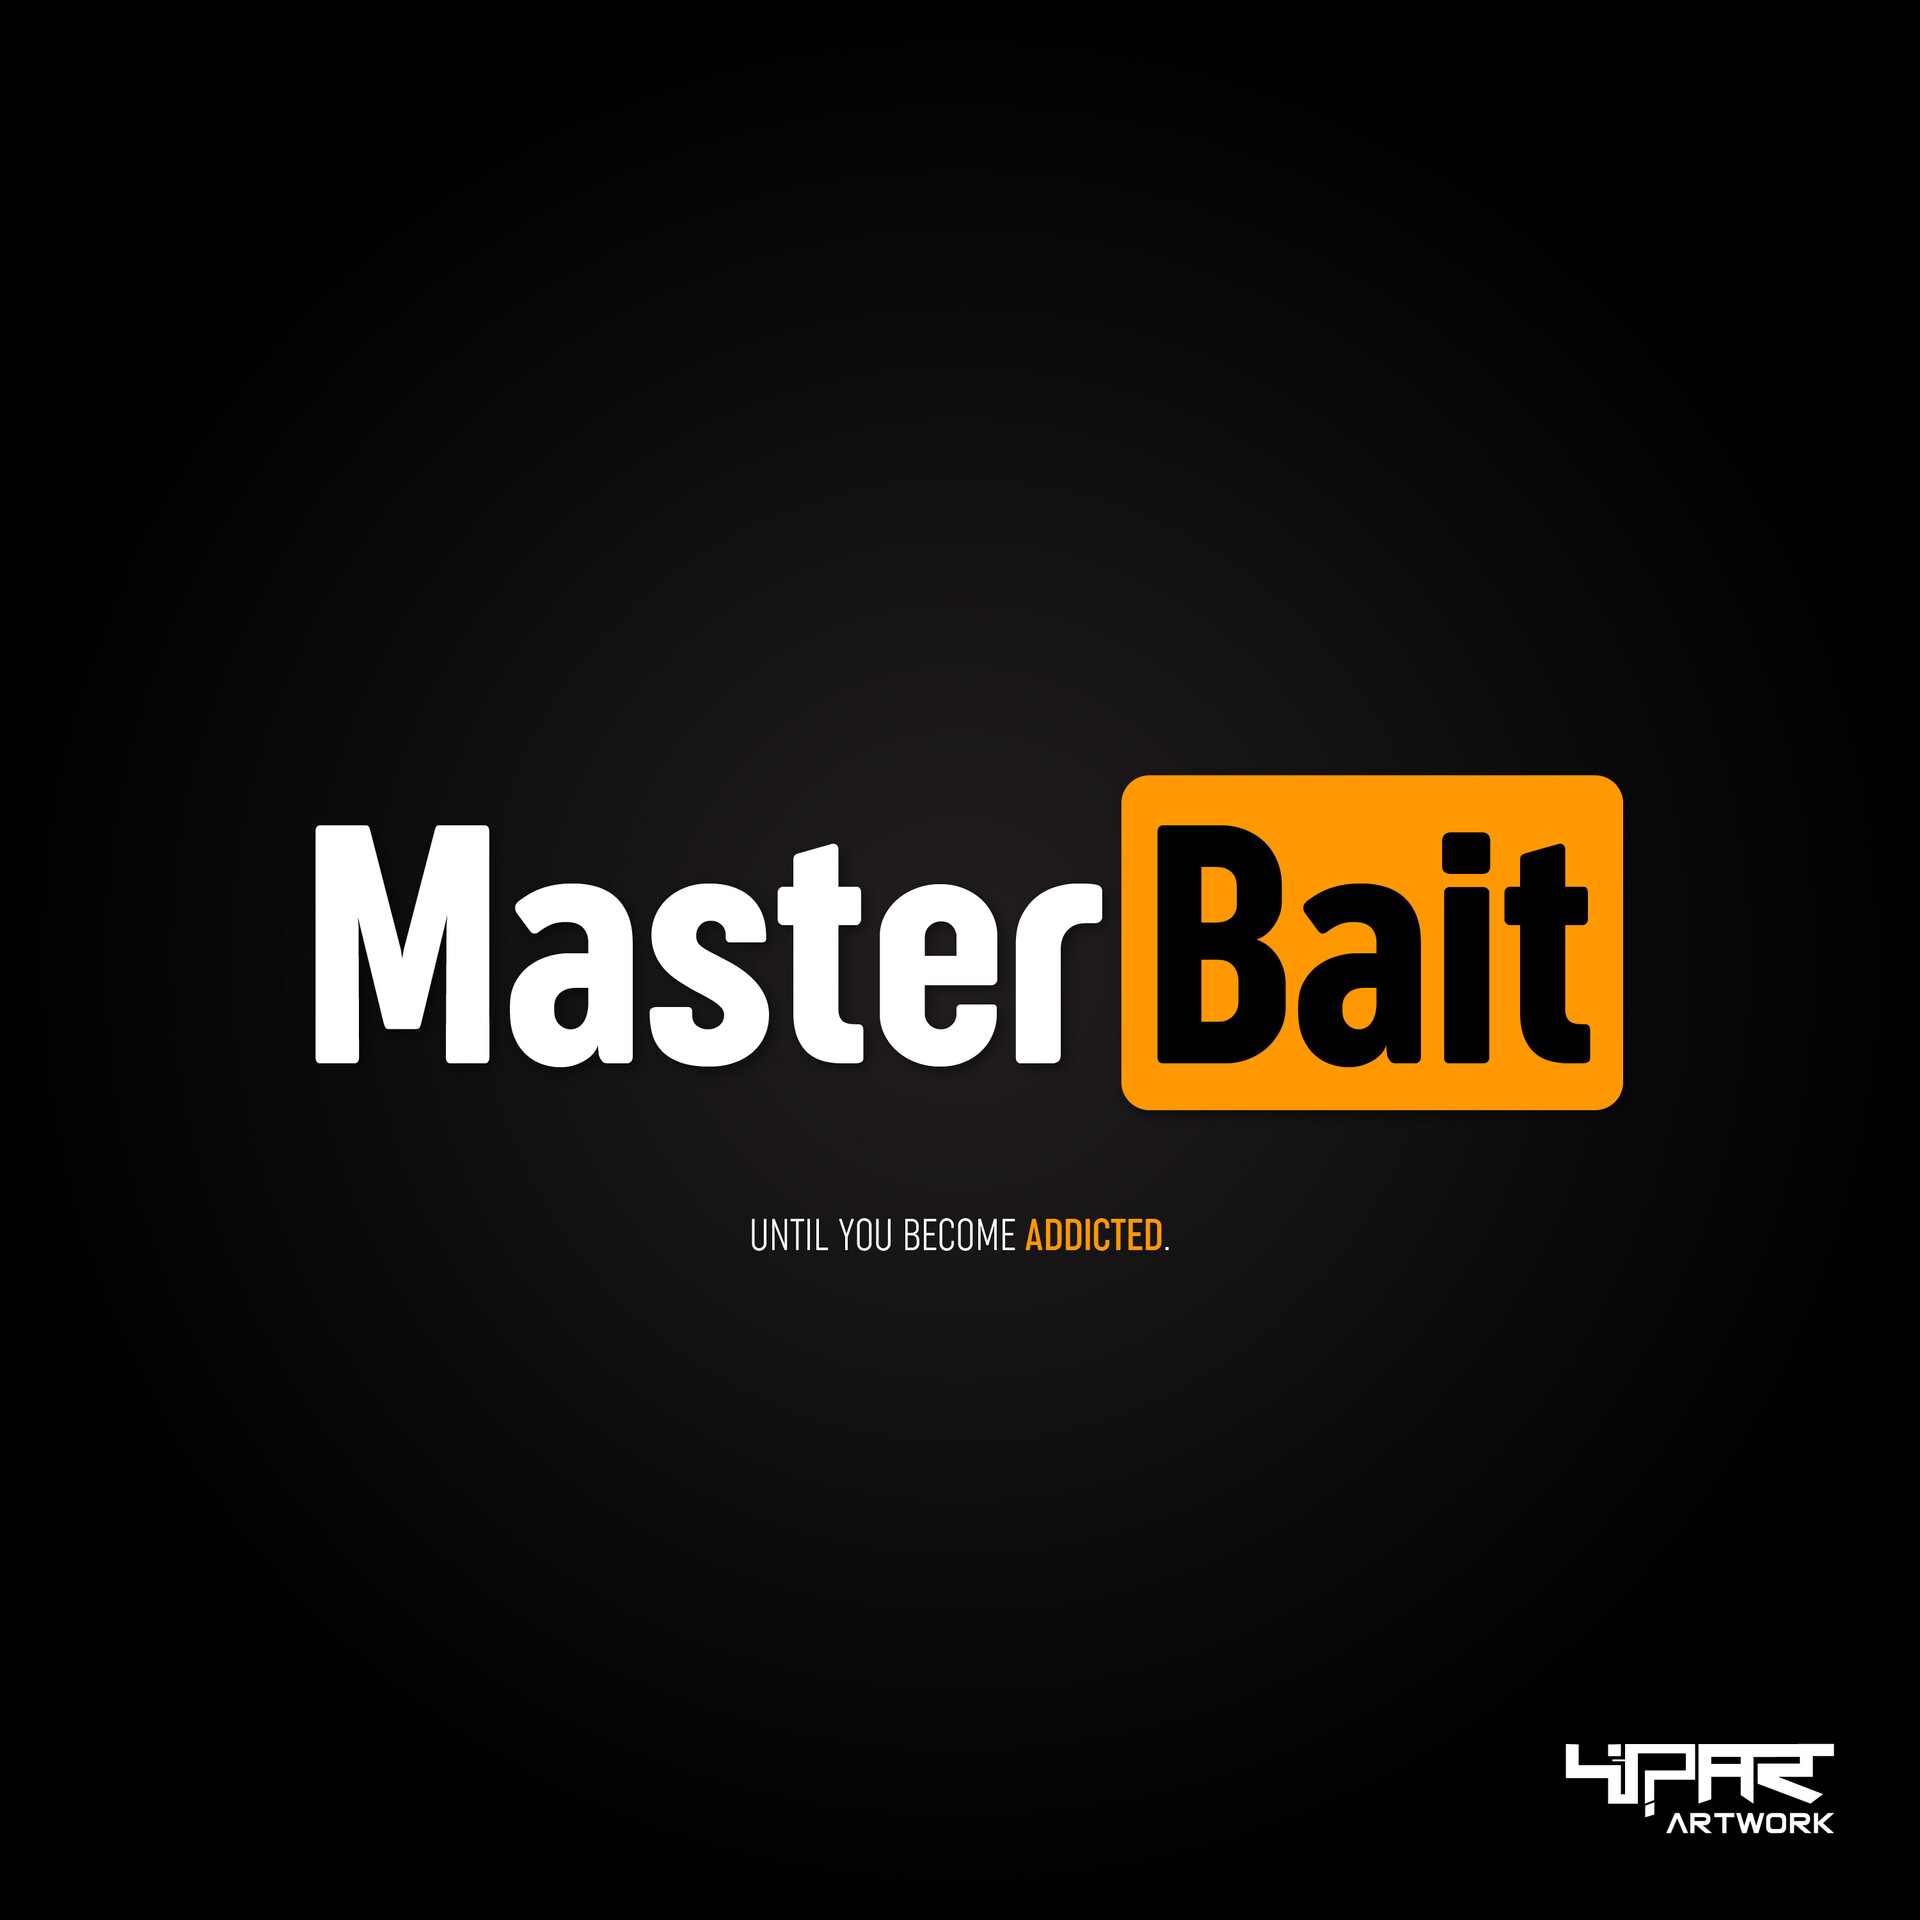 ArtStation - Master BAIT used by Adult Websites To Make You Addict